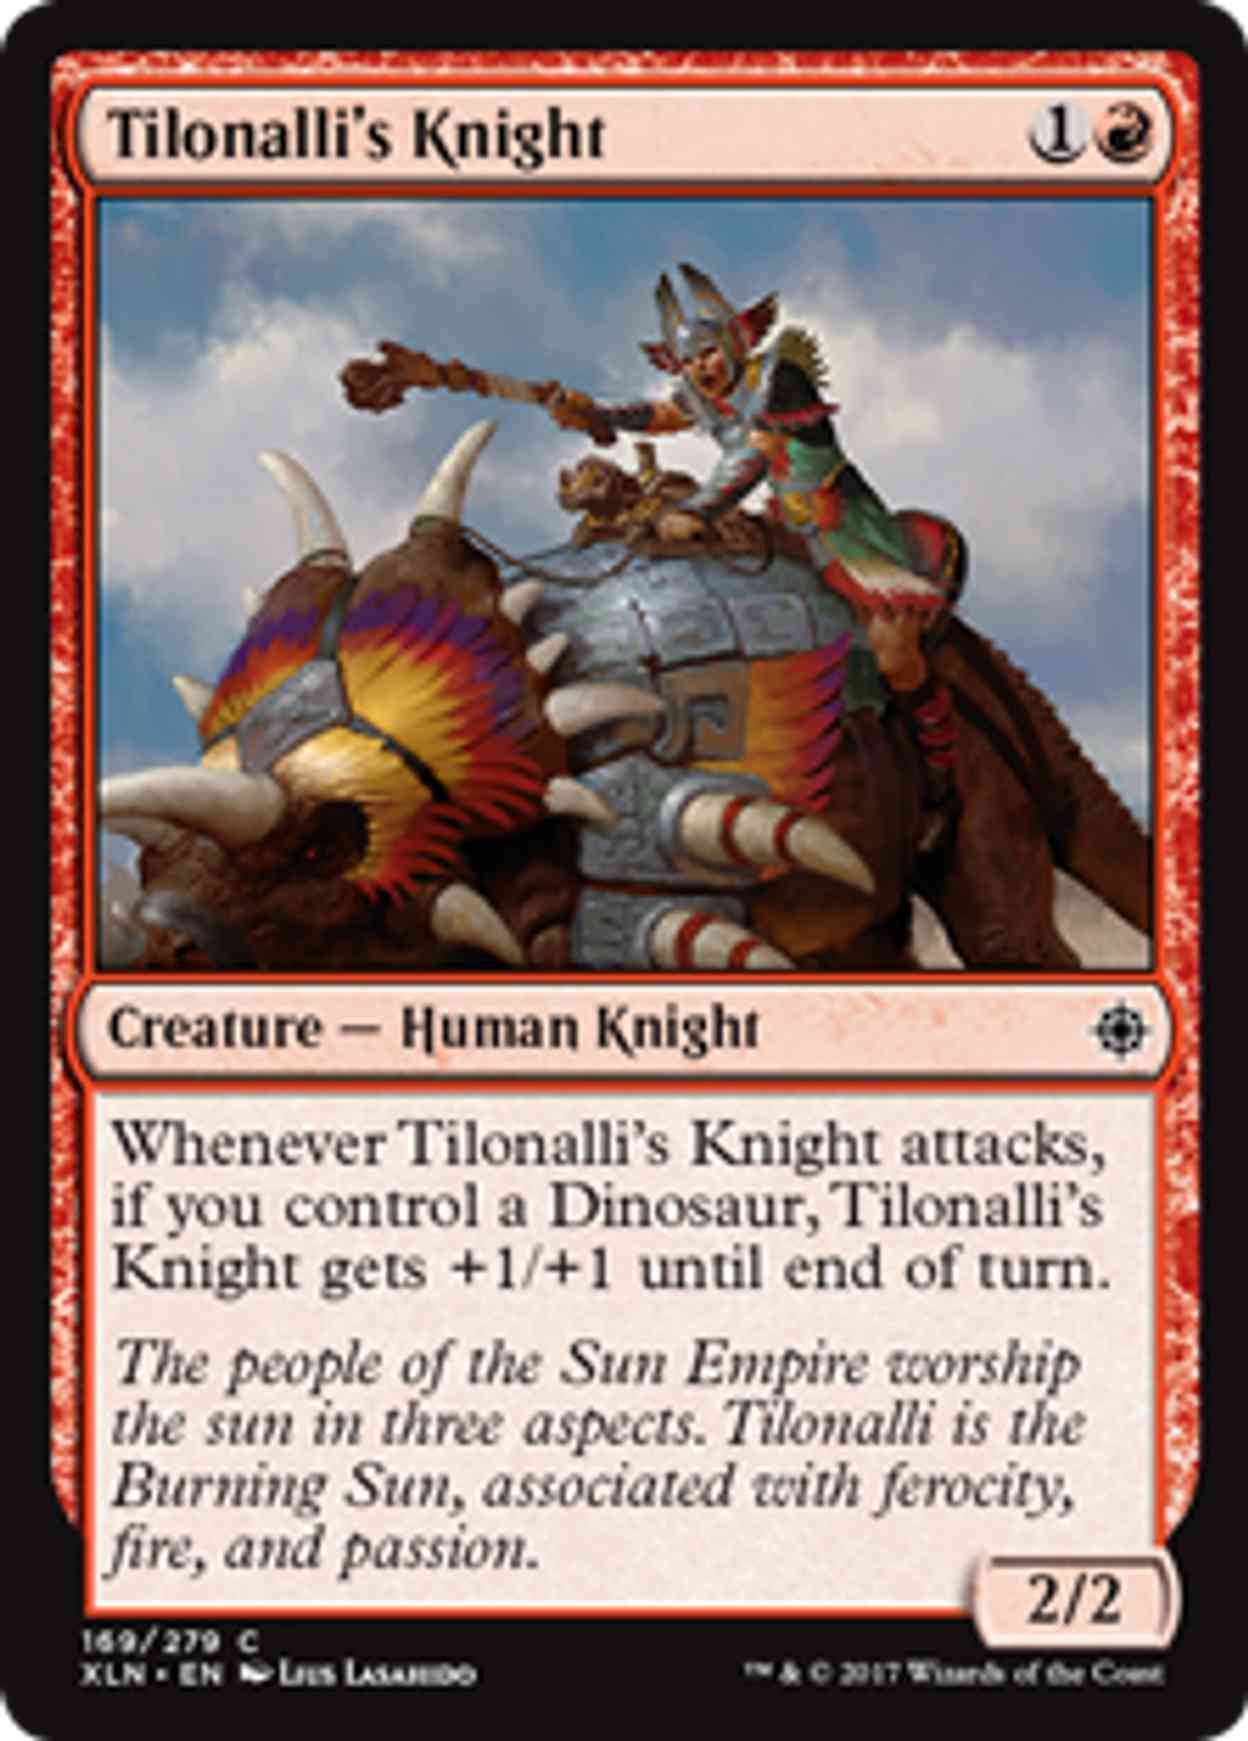 Tilonalli's Knight magic card front